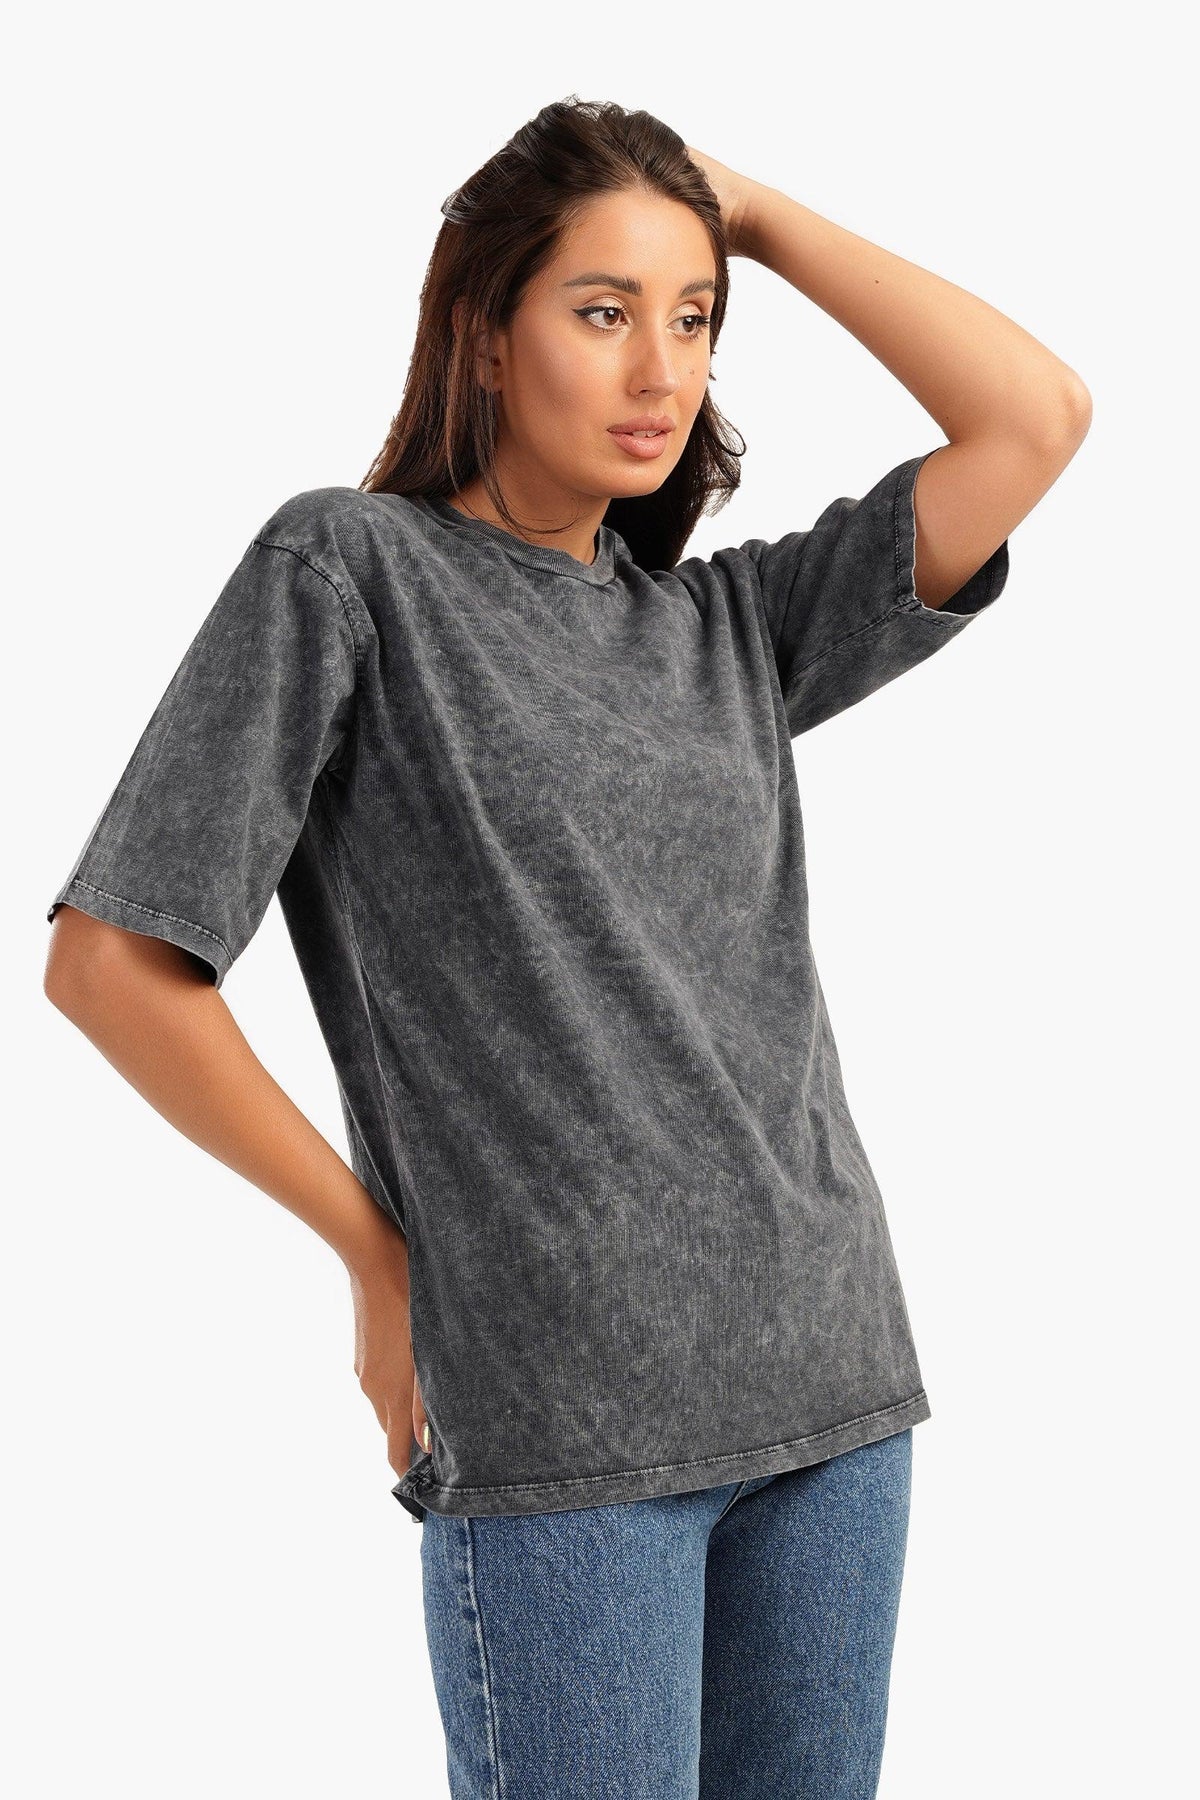 Heather Grey Cotton T-Shirt - Carina - كارينا